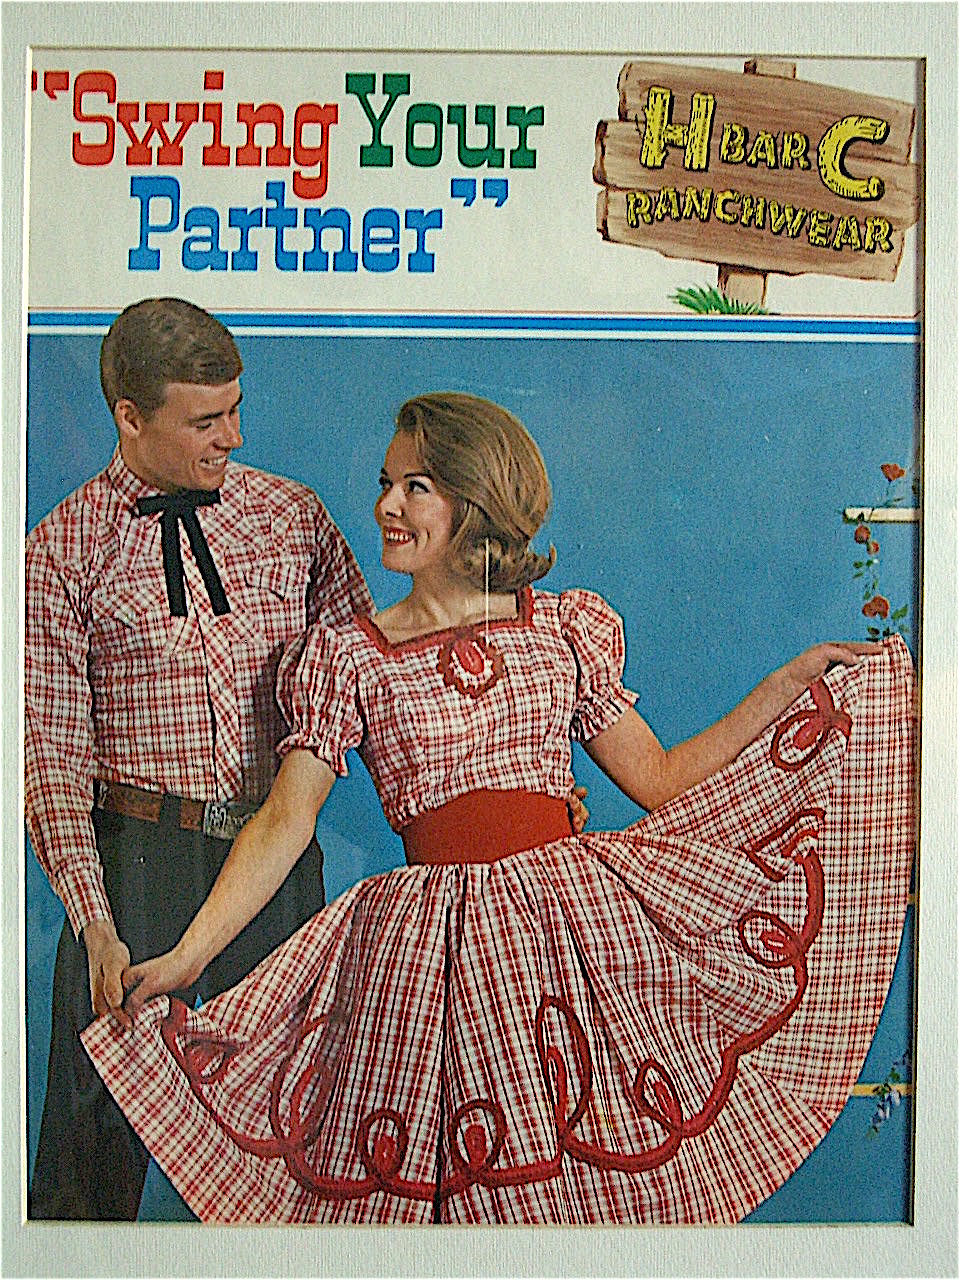 H-bar-C Ranchwear - full color Swing Your Partner poster